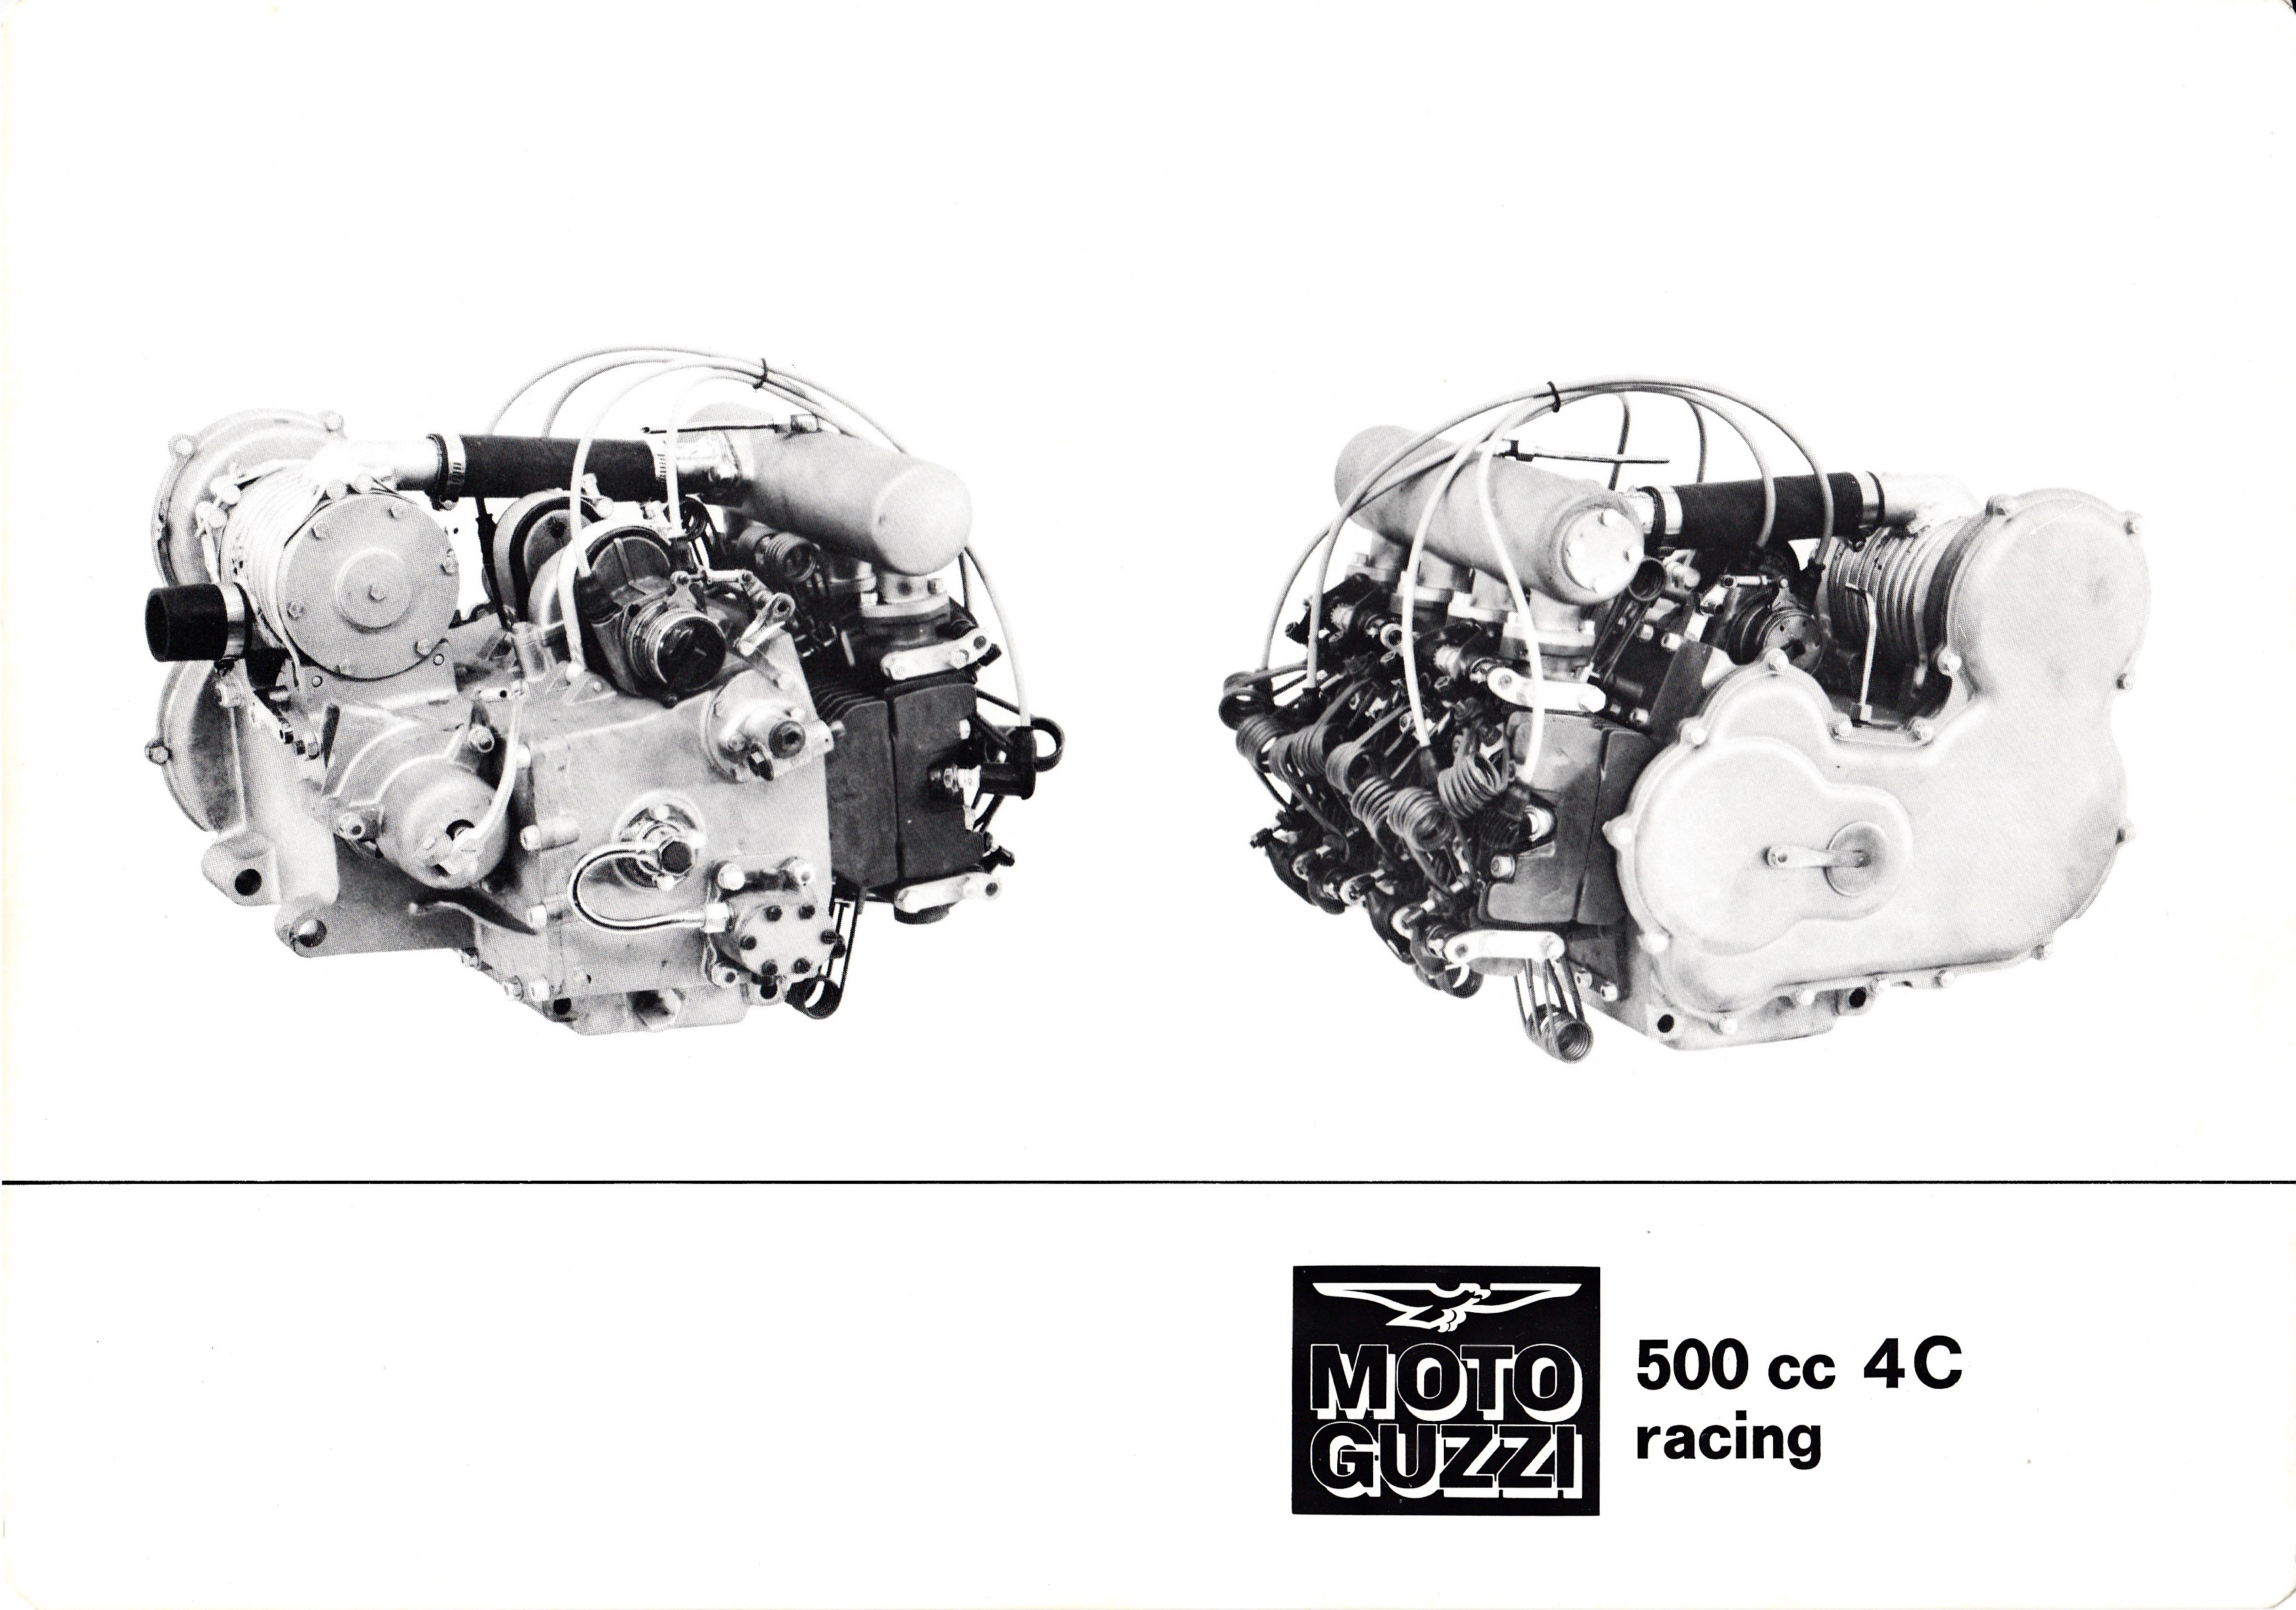 Brochure - Moto Guzzi 500 cc 4 cylinder racing